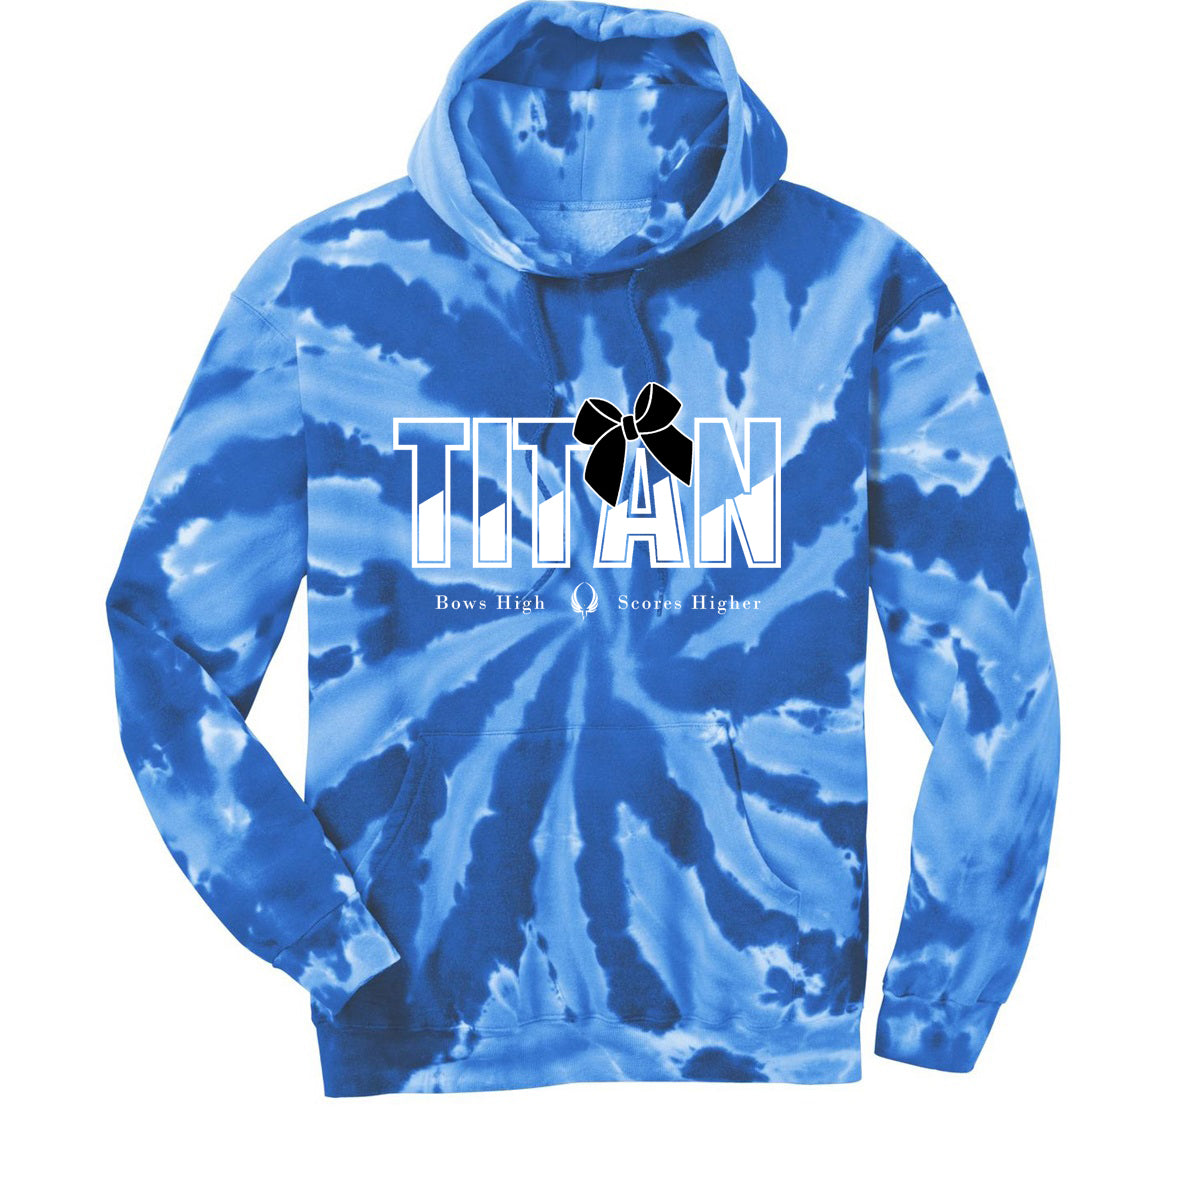 Titan Tie-Dye Hooded Sweatshirt Bows High